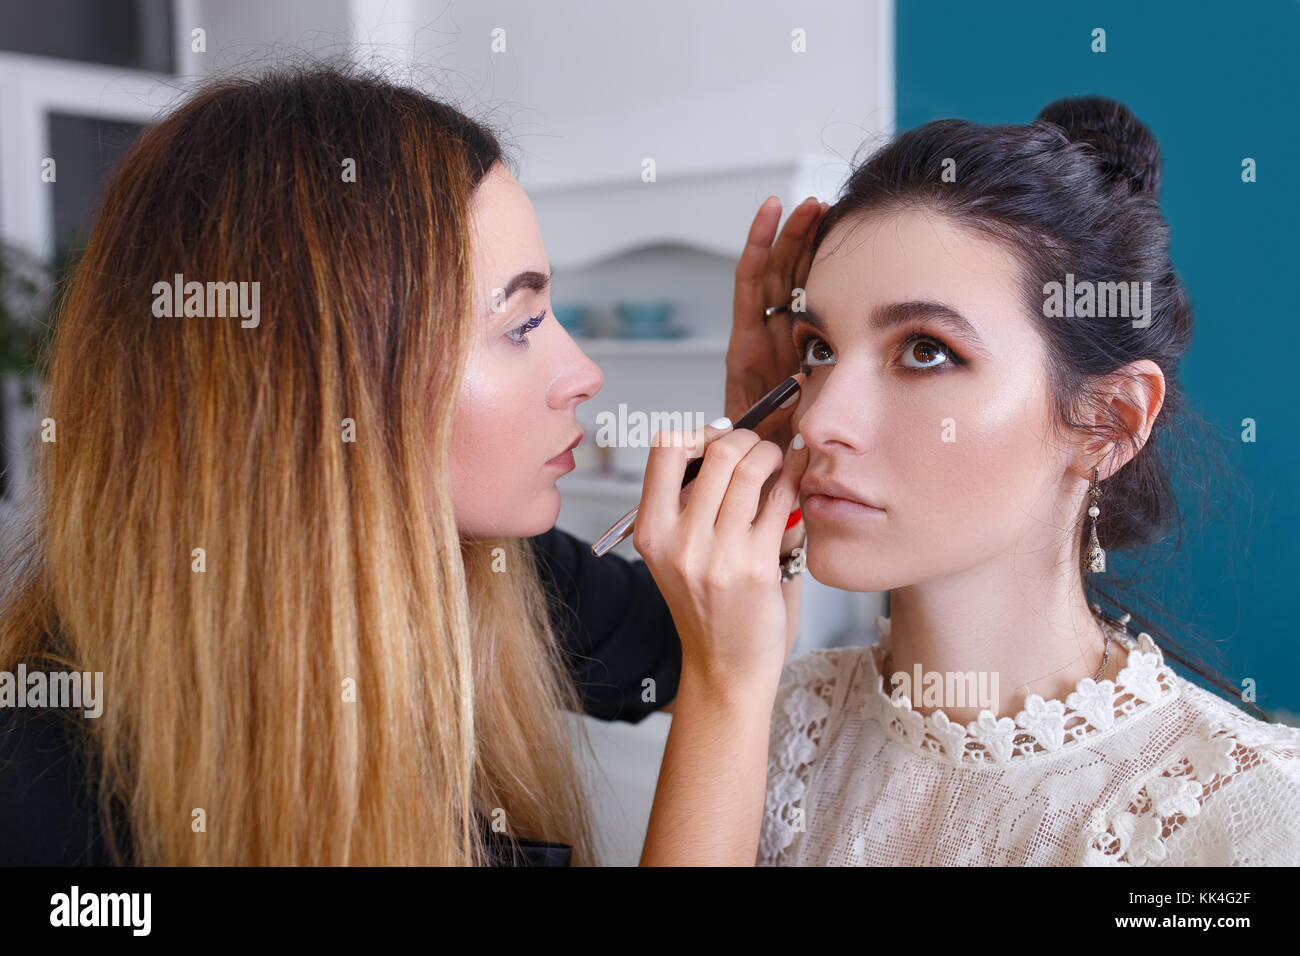 makeup artist applying eyeliner Stock Photo